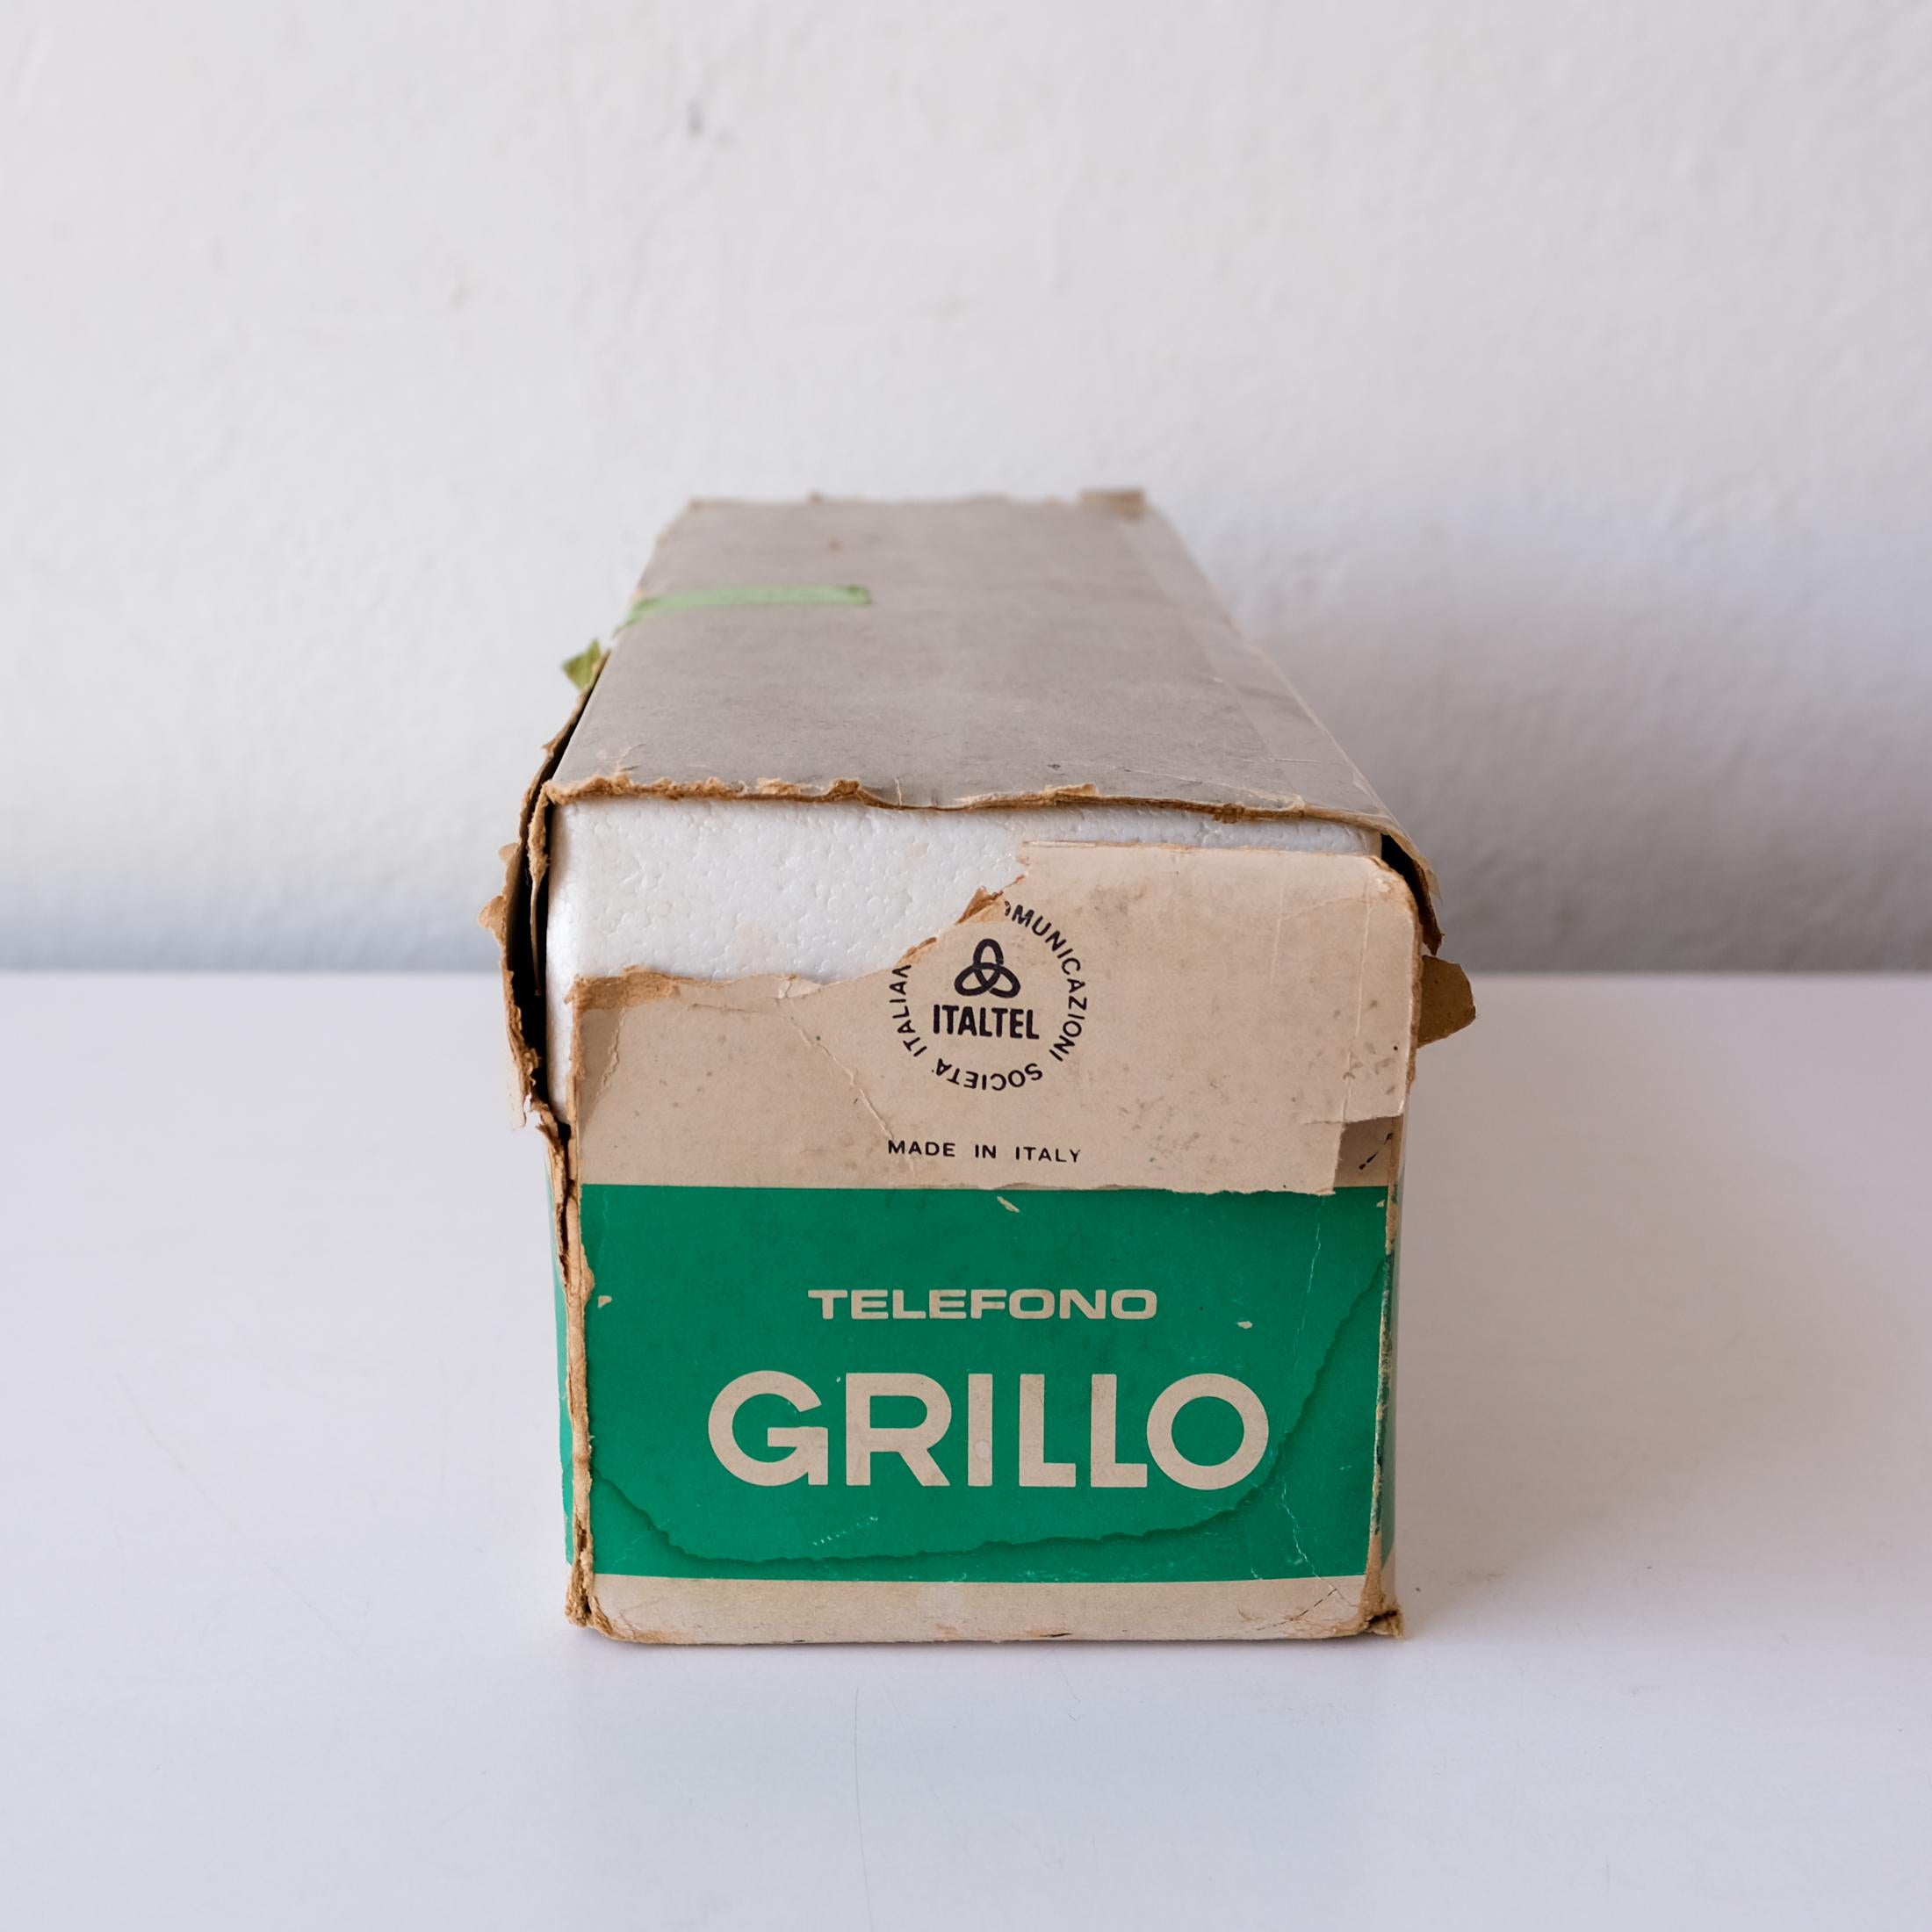 Grillo Folding Telephone by Marco Zanuso Richard Sapper with Box 1966 1